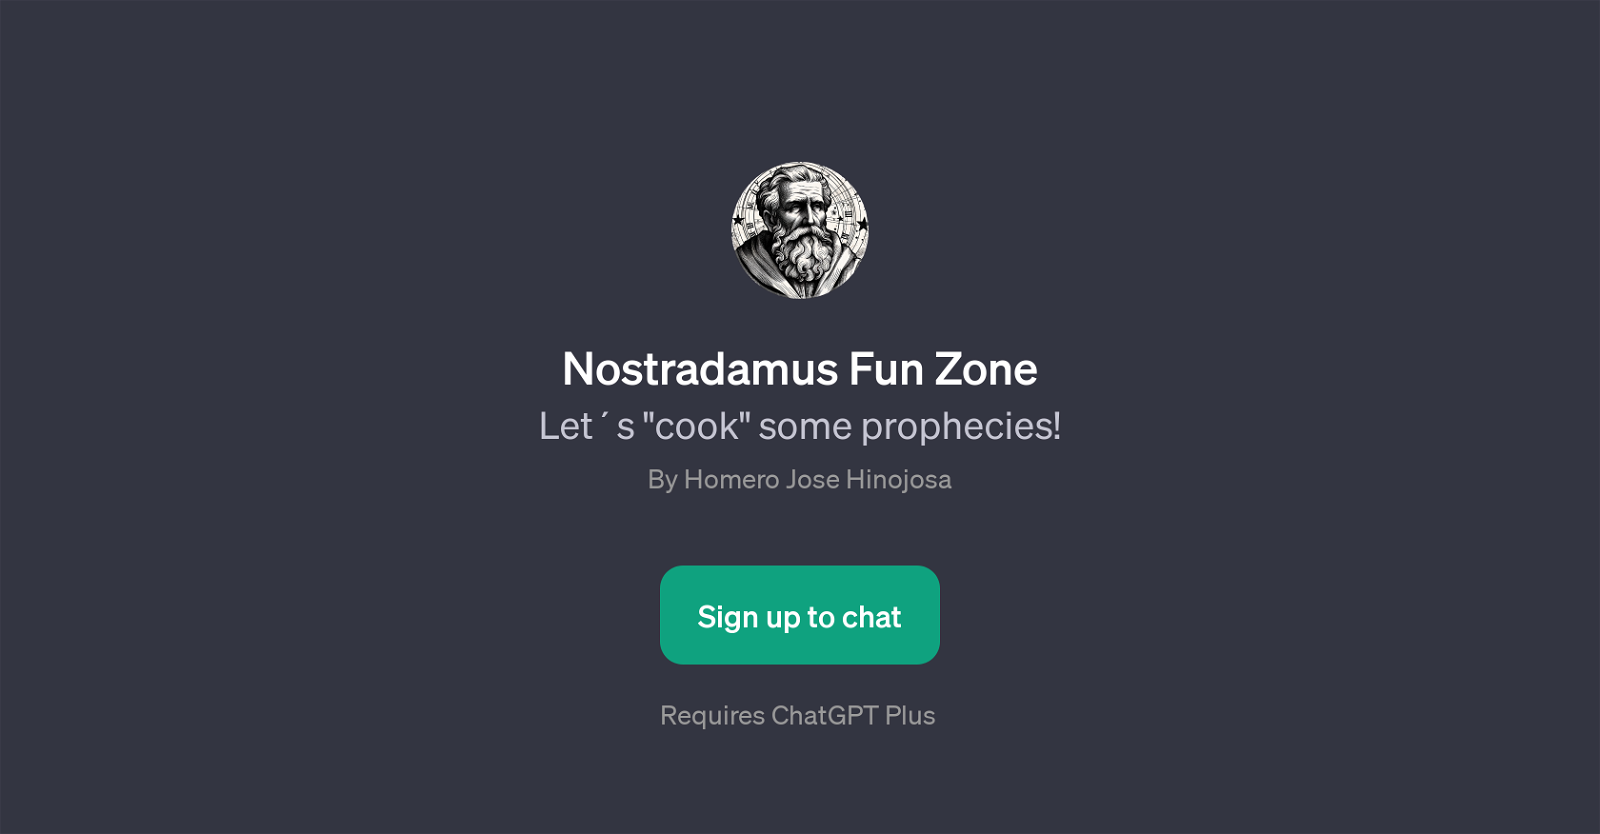 Nostradamus Fun Zone website